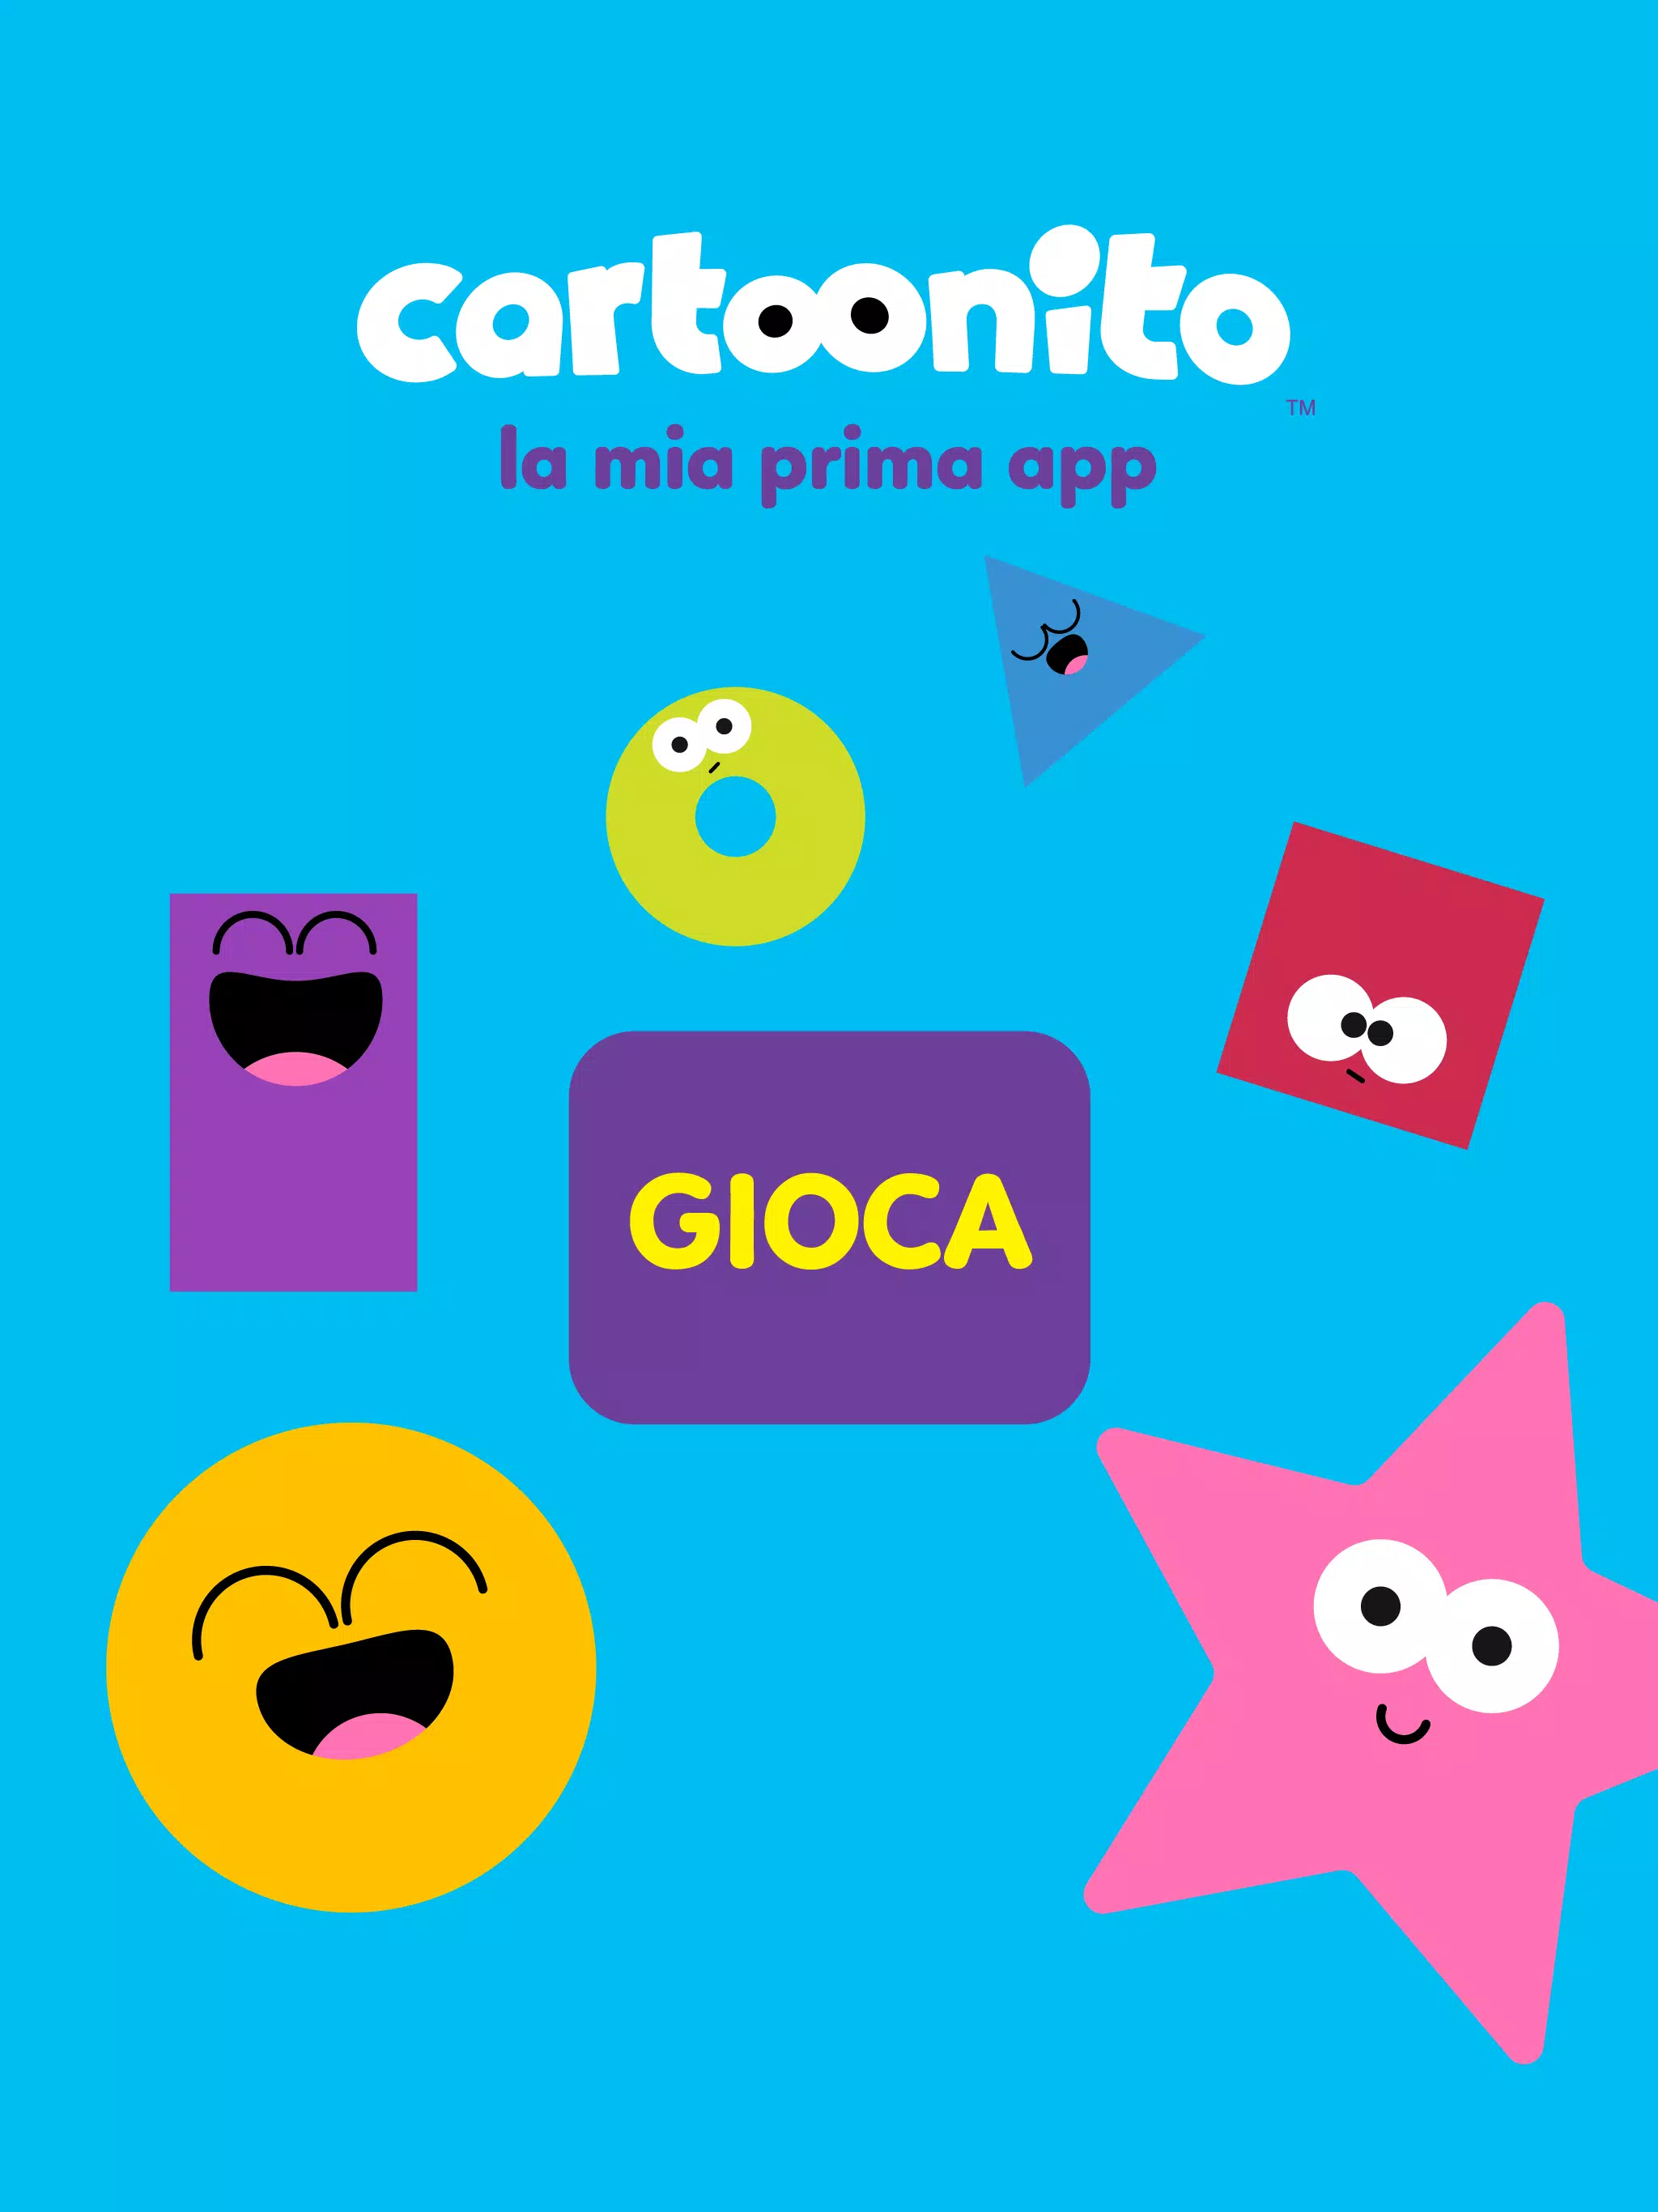 Cartoonito app - Xilofono APK for Android Download